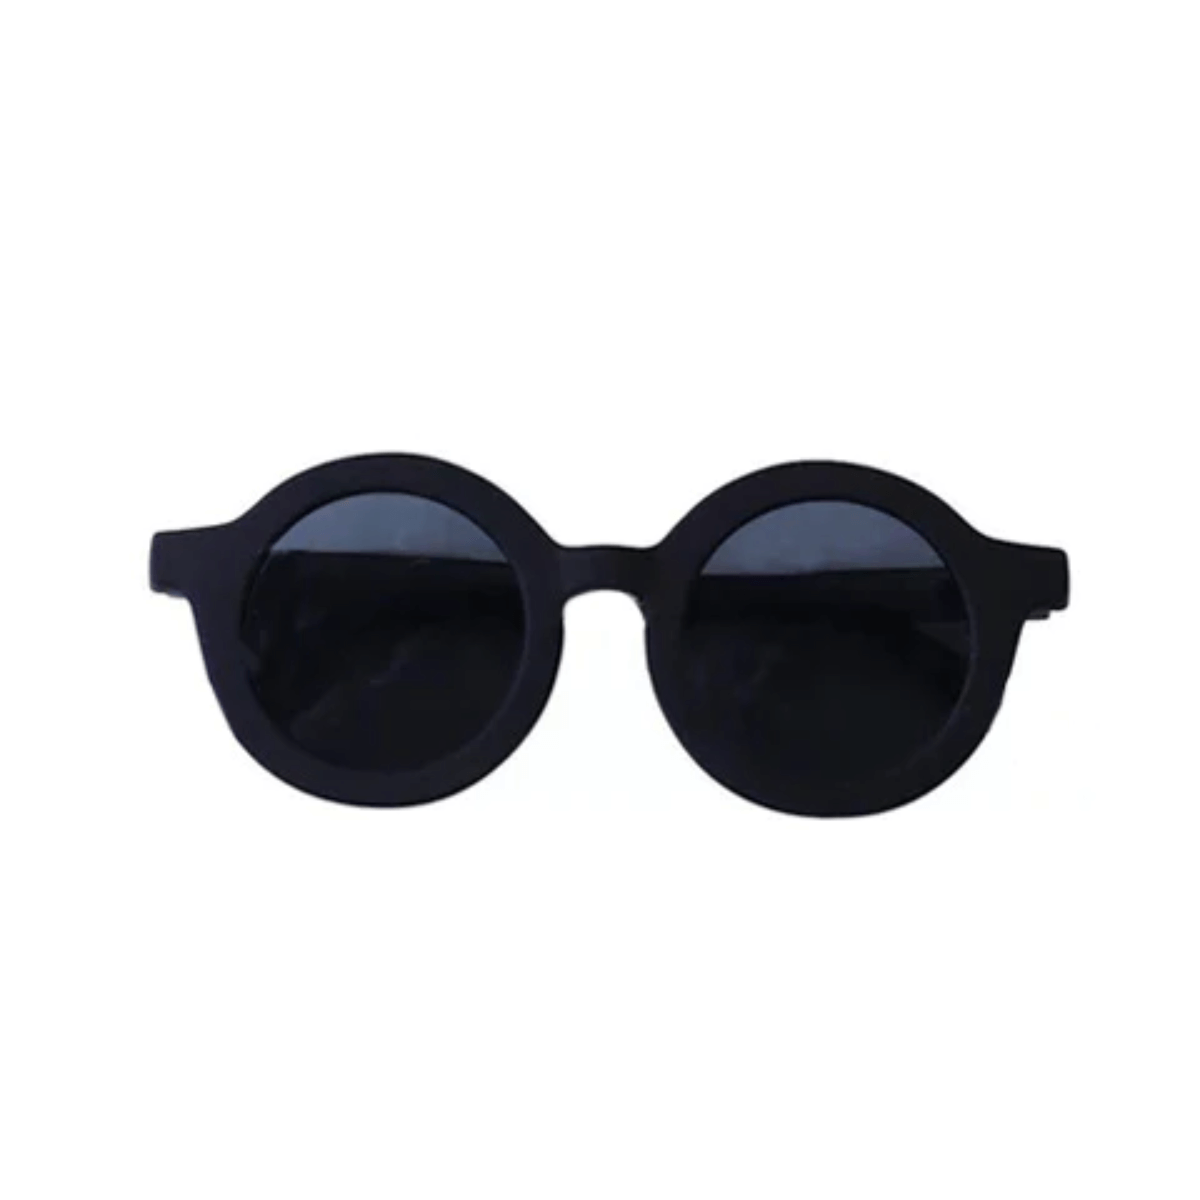 Little Indians Sunglasses Black - Zonnebril - Zwart1